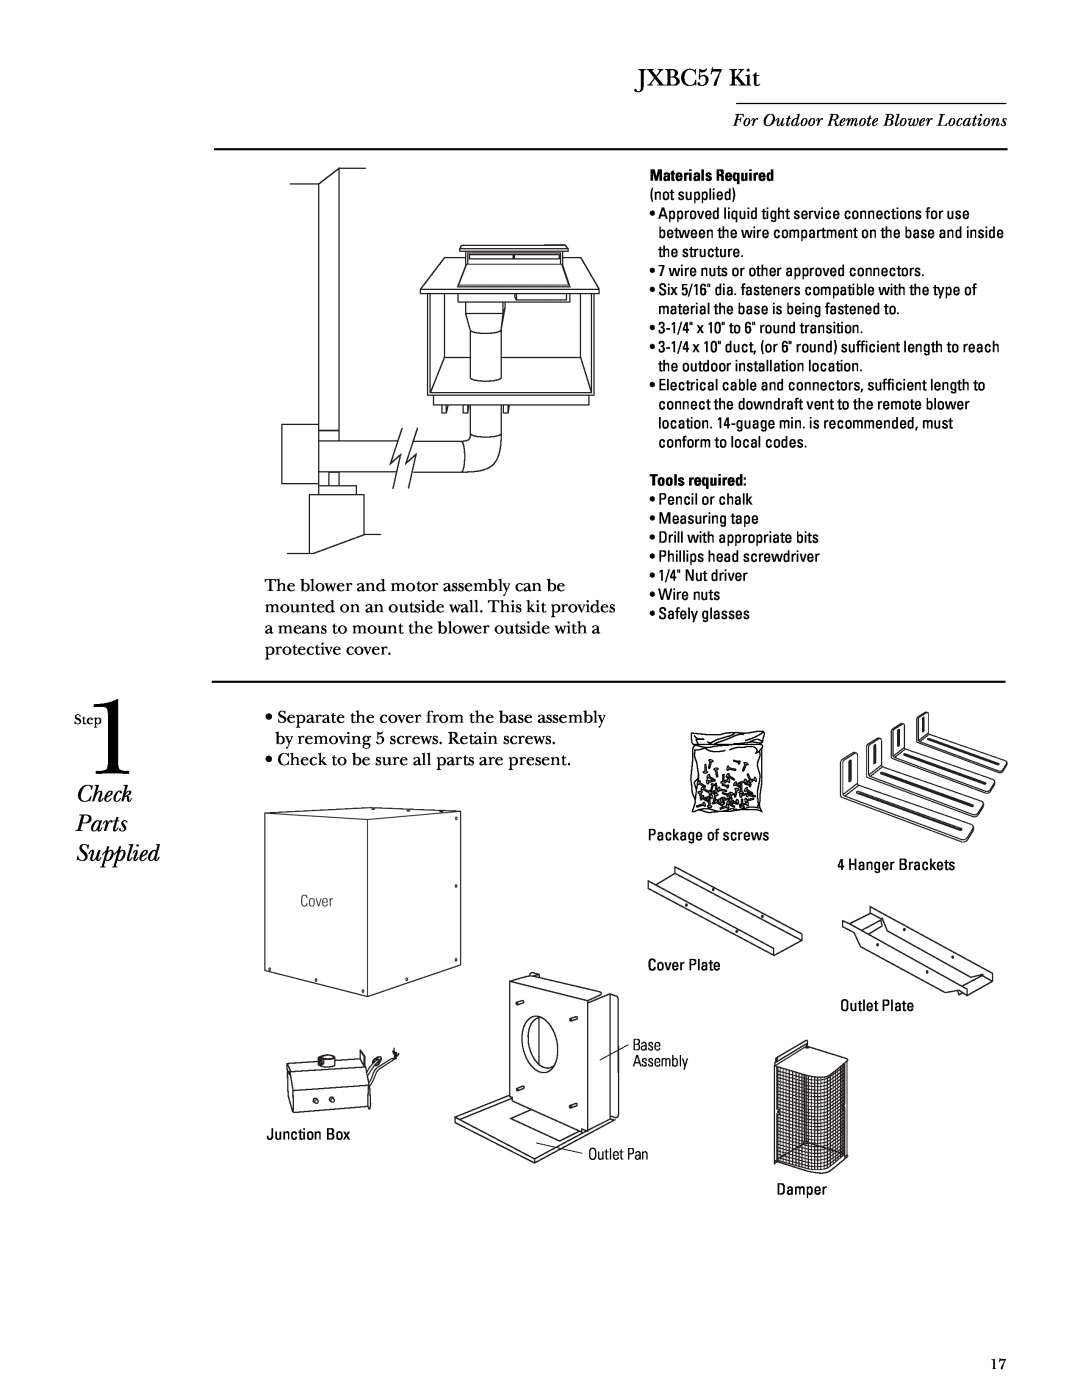 GE Monogram ZGU365 installation instructions JXBC57 Kit, Check Parts Supplied 